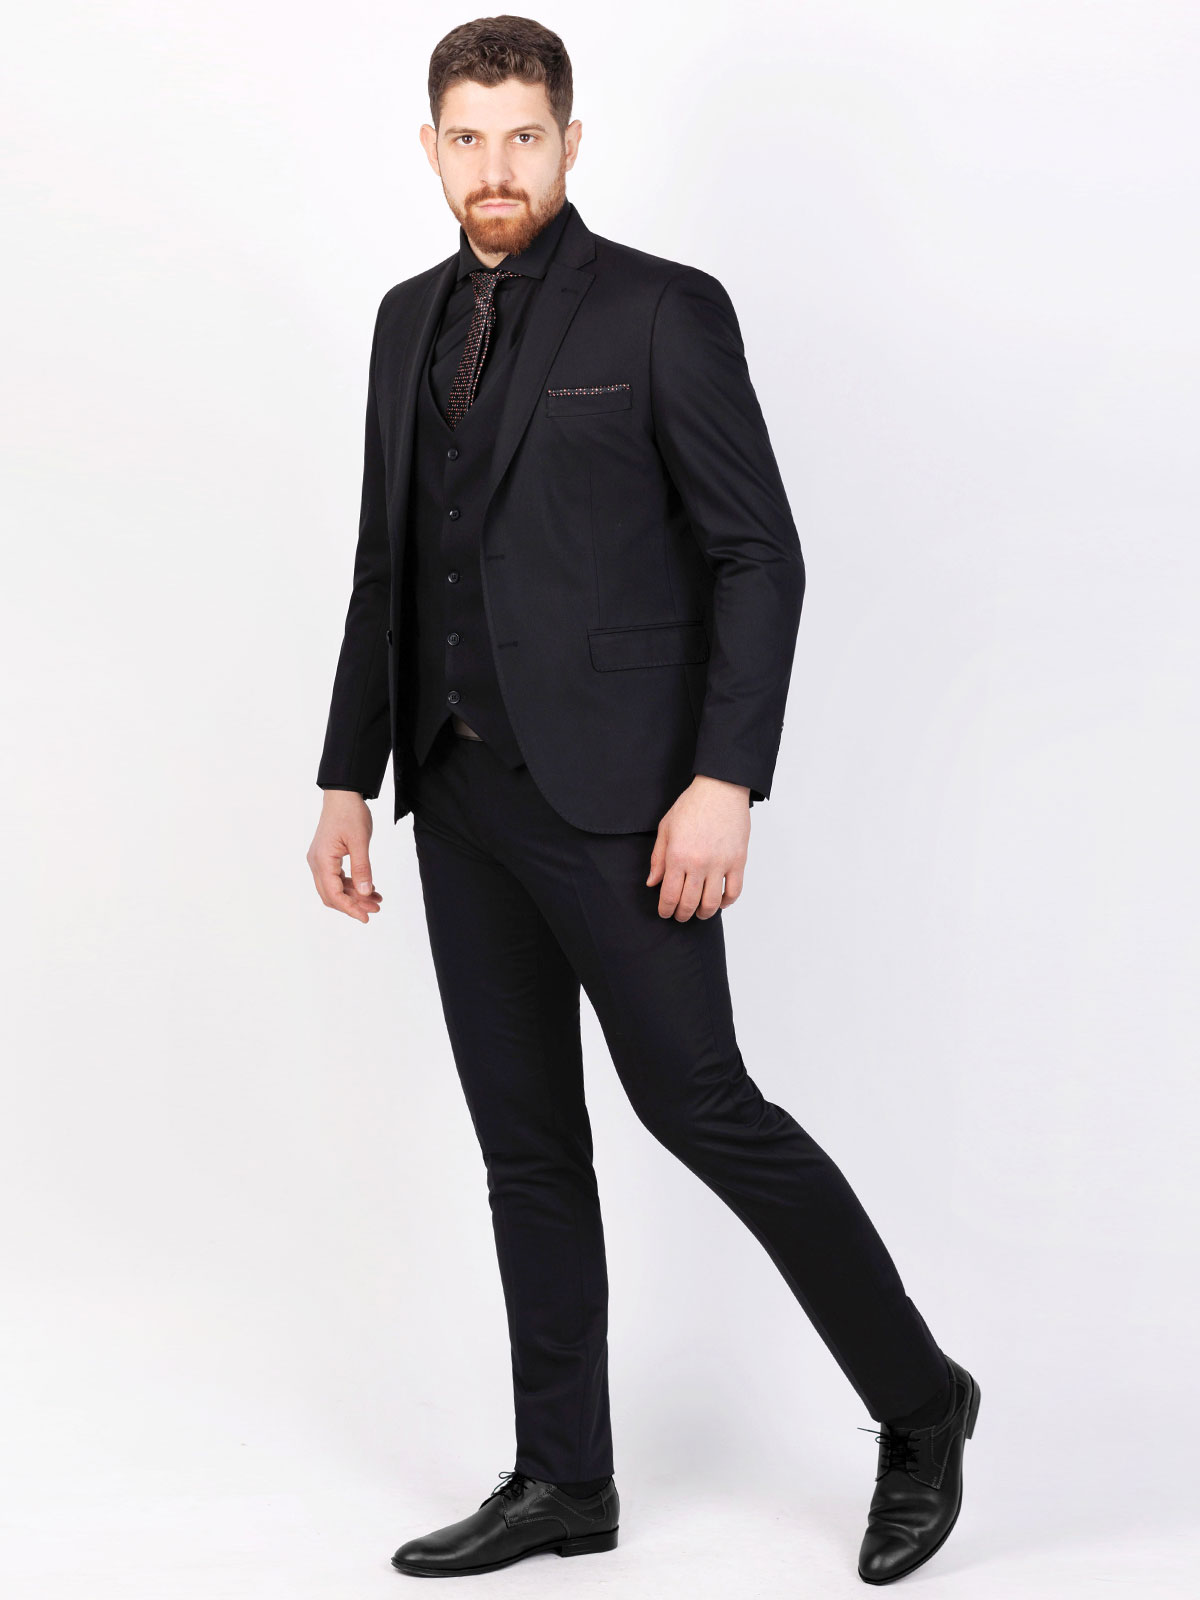 Black fitted elegant jacket - 64120 € 141.73 img2